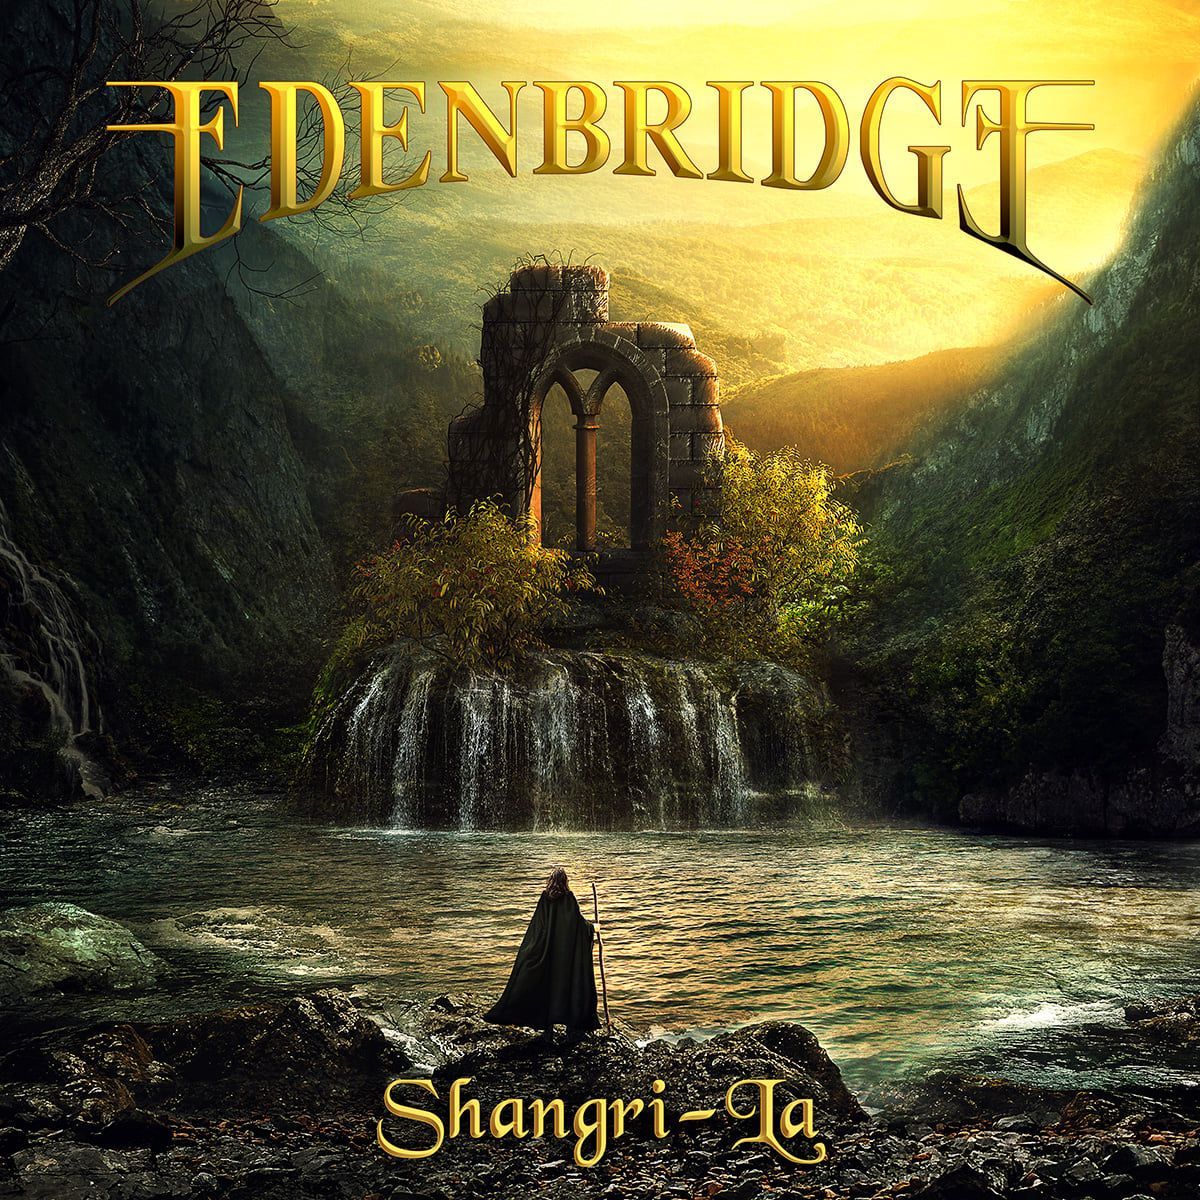 Edenbridge - The Road To Shangri-La (clip)